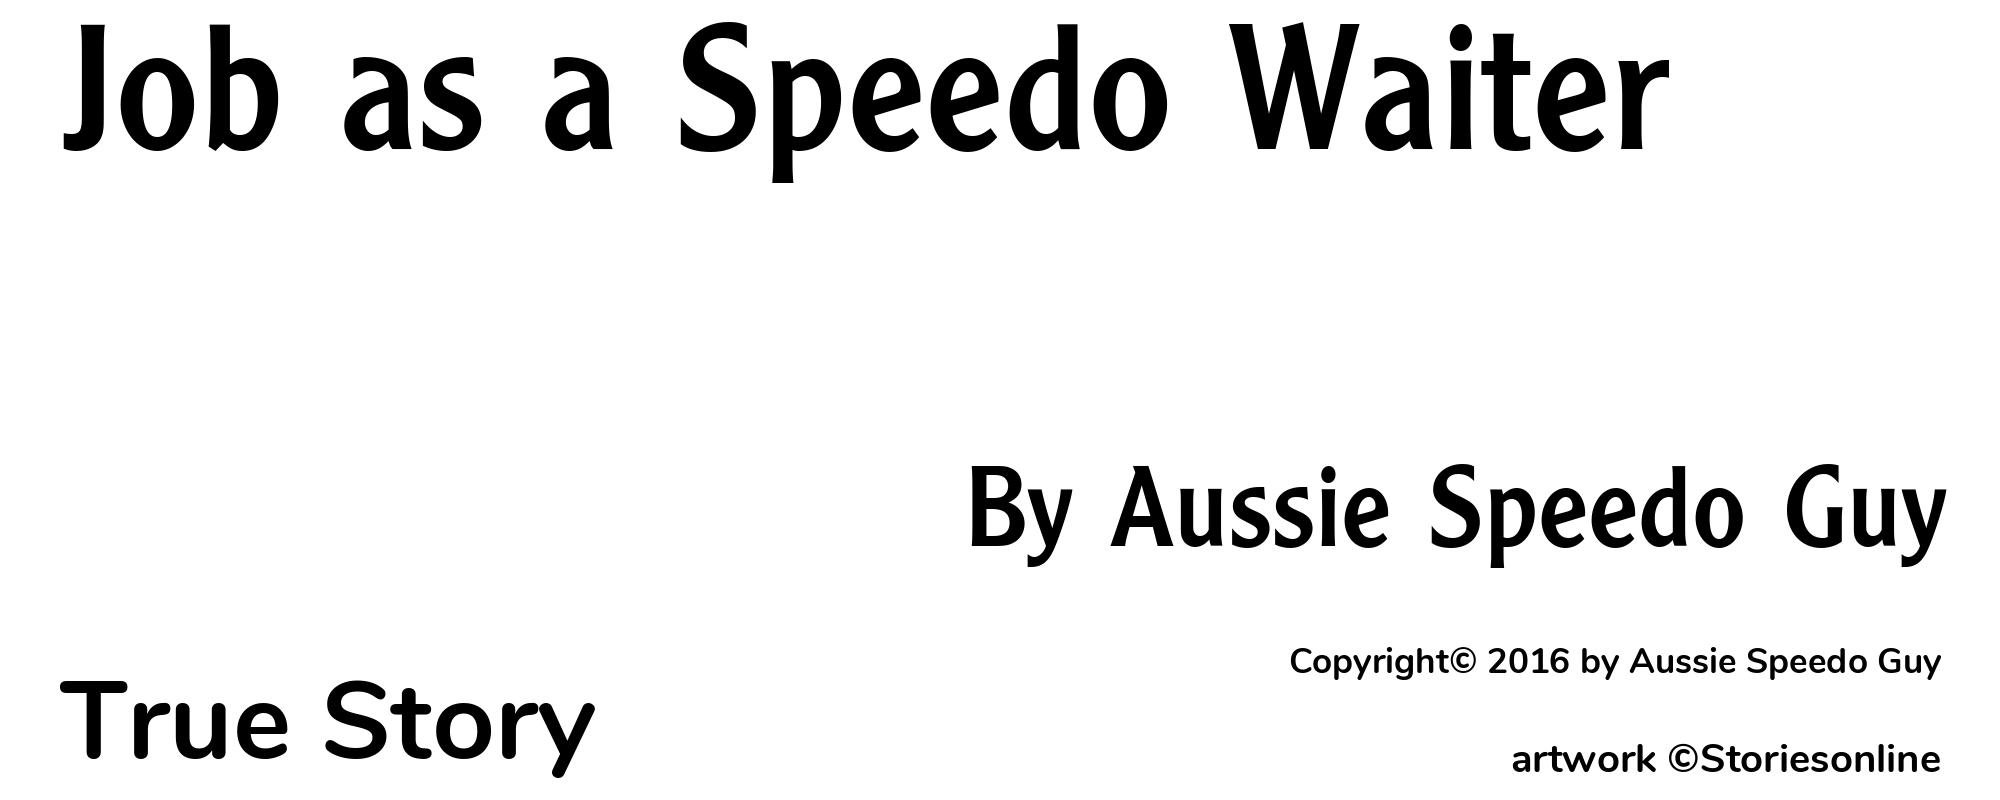 Job as a Speedo Waiter - Cover